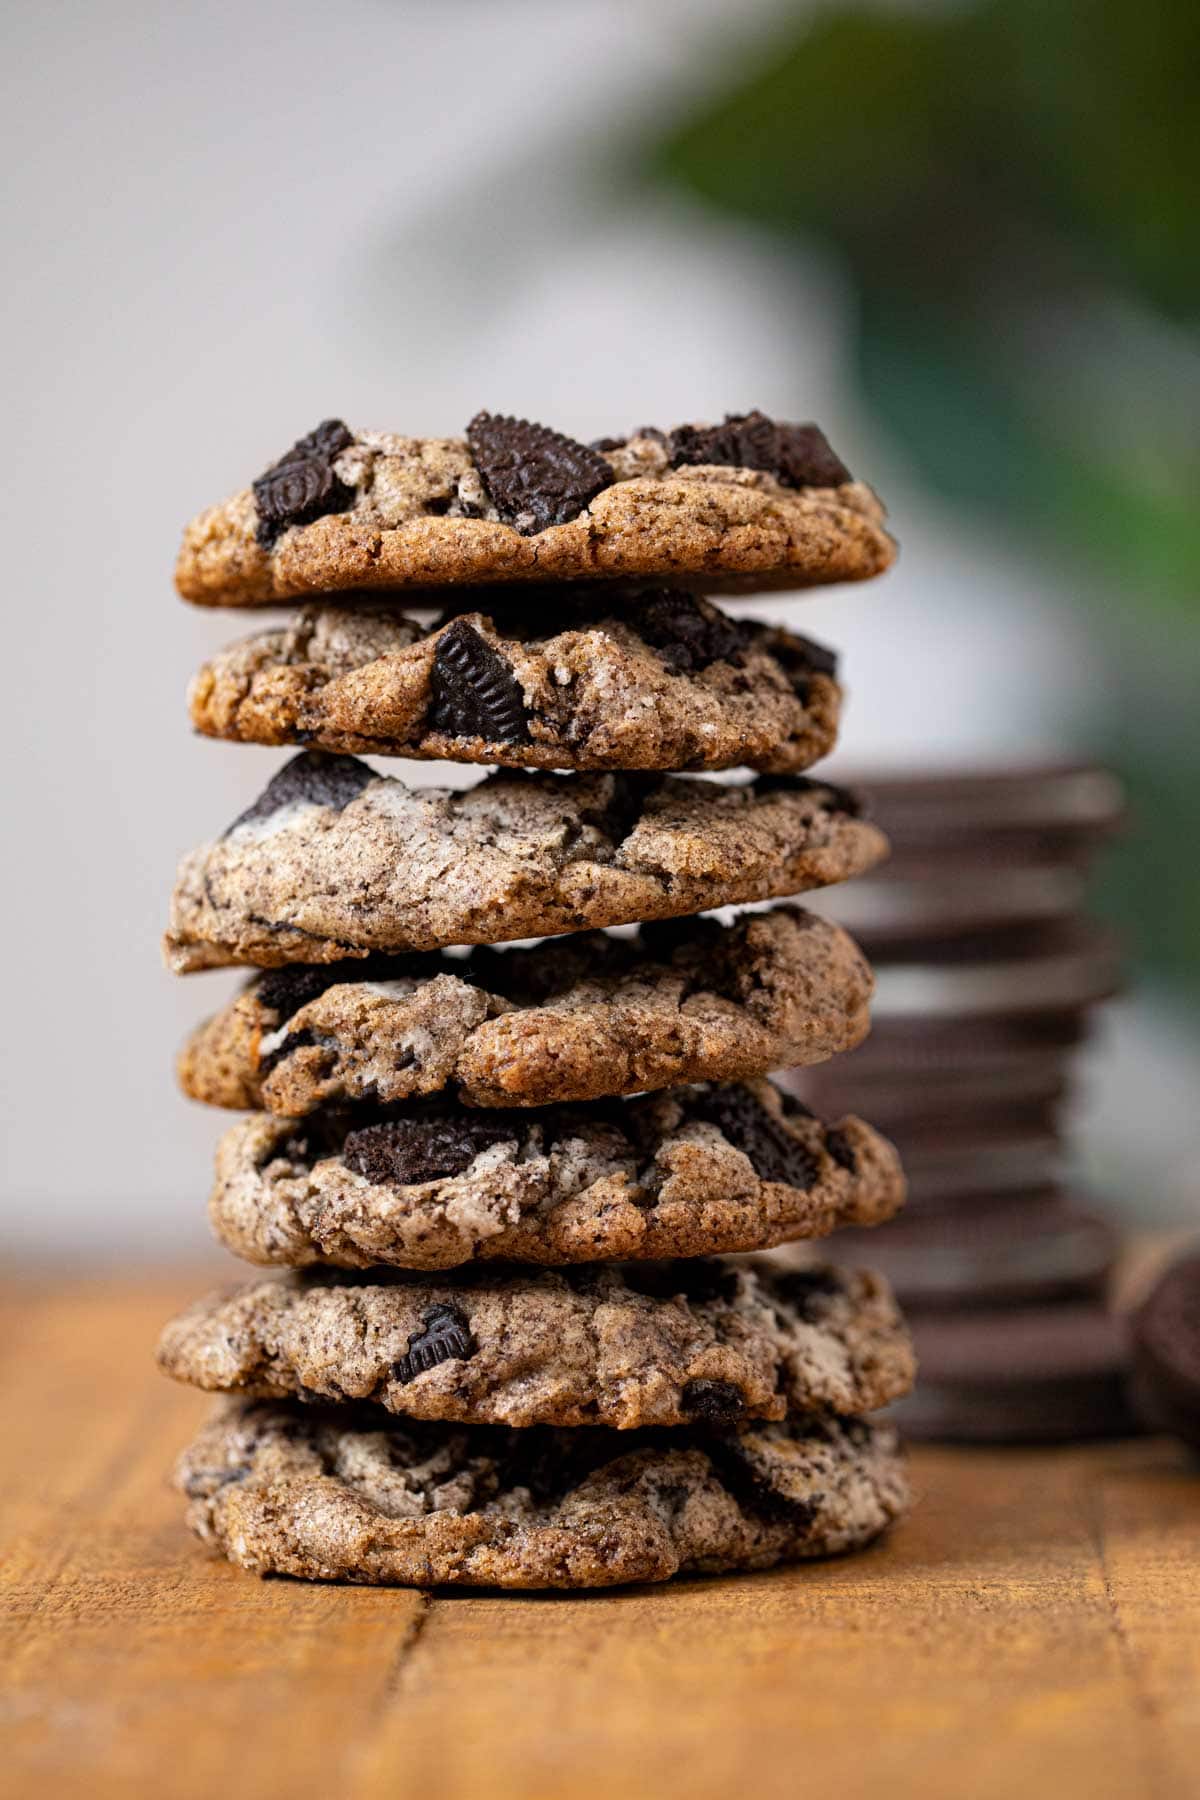 https://dinnerthendessert.com/wp-content/uploads/2015/06/Oreo-Chunk-Cookies.jpg